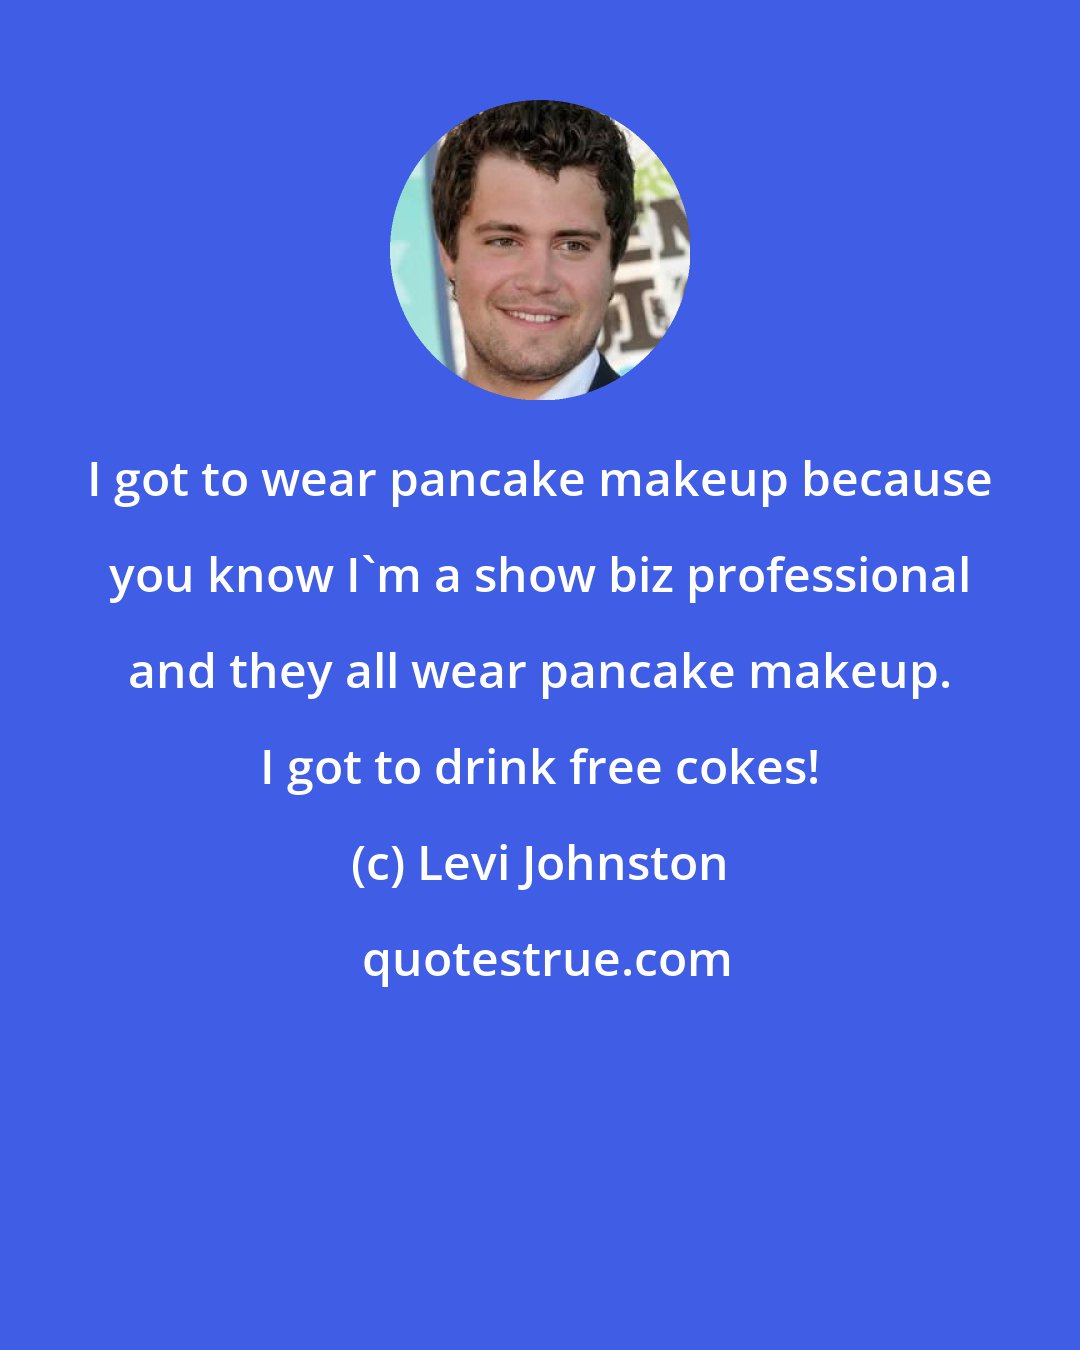 Levi Johnston: I got to wear pancake makeup because you know I'm a show biz professional and they all wear pancake makeup. I got to drink free cokes!